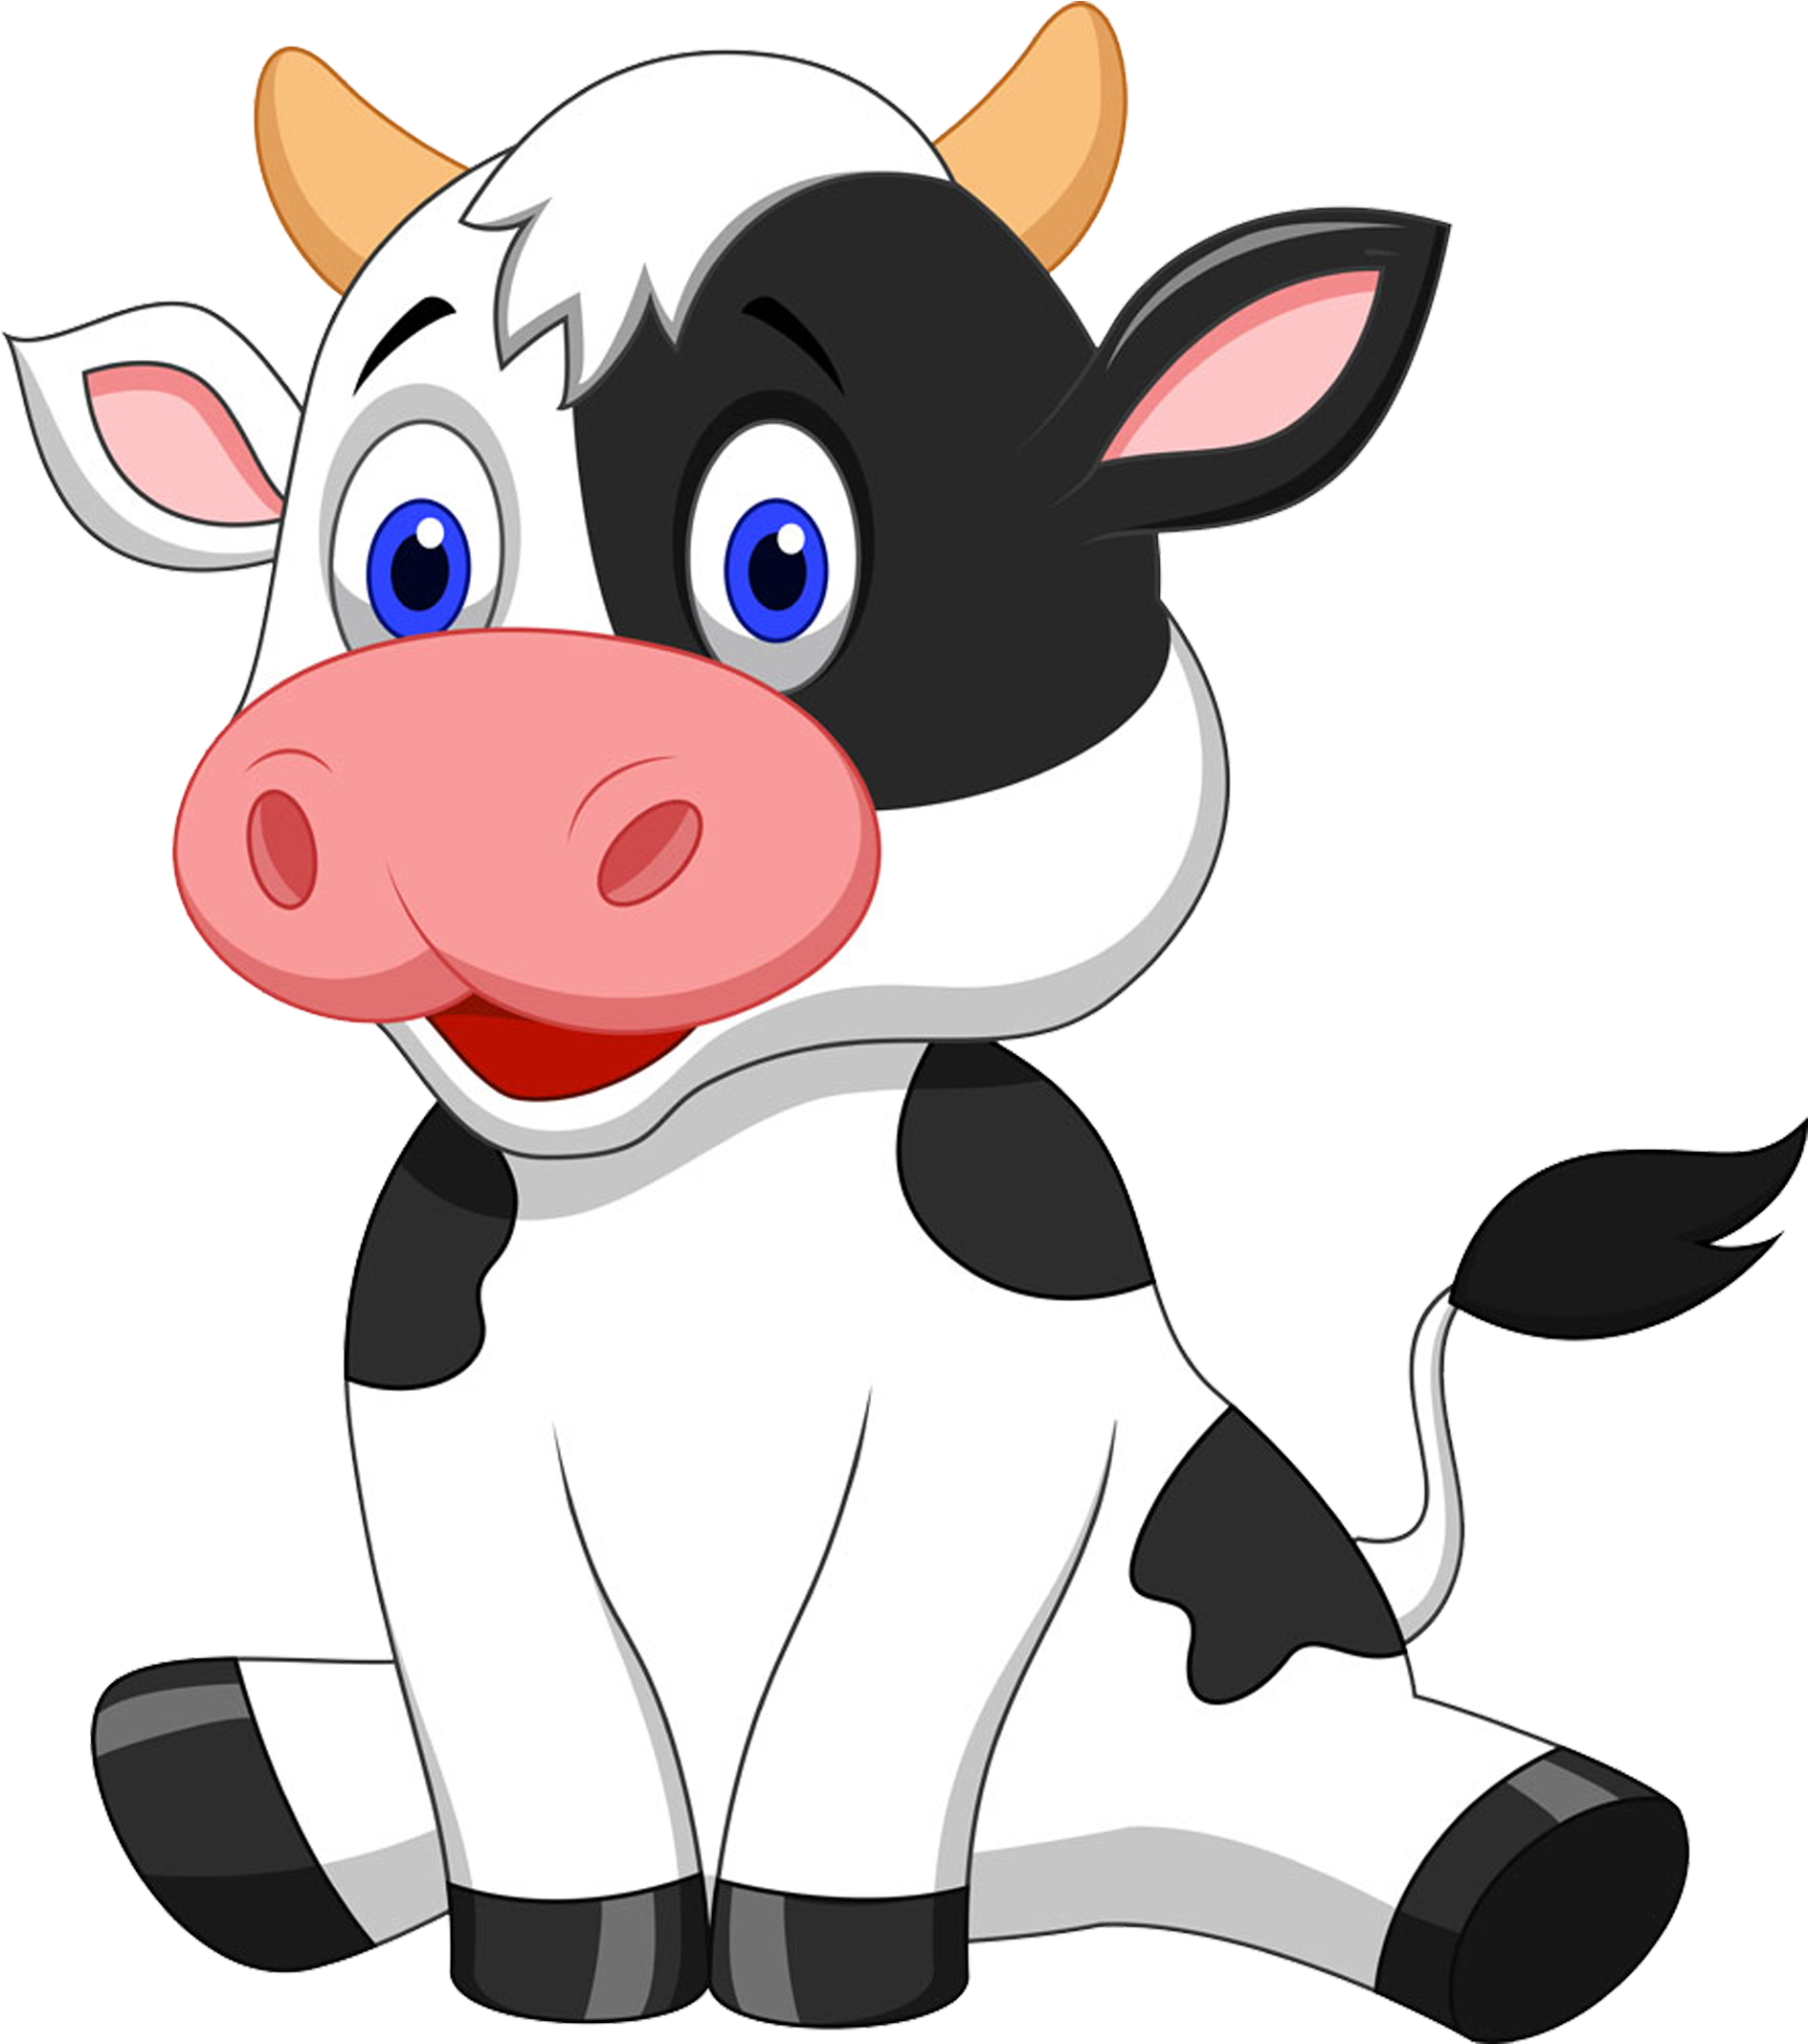 Fondo de imagen PNG de vaca